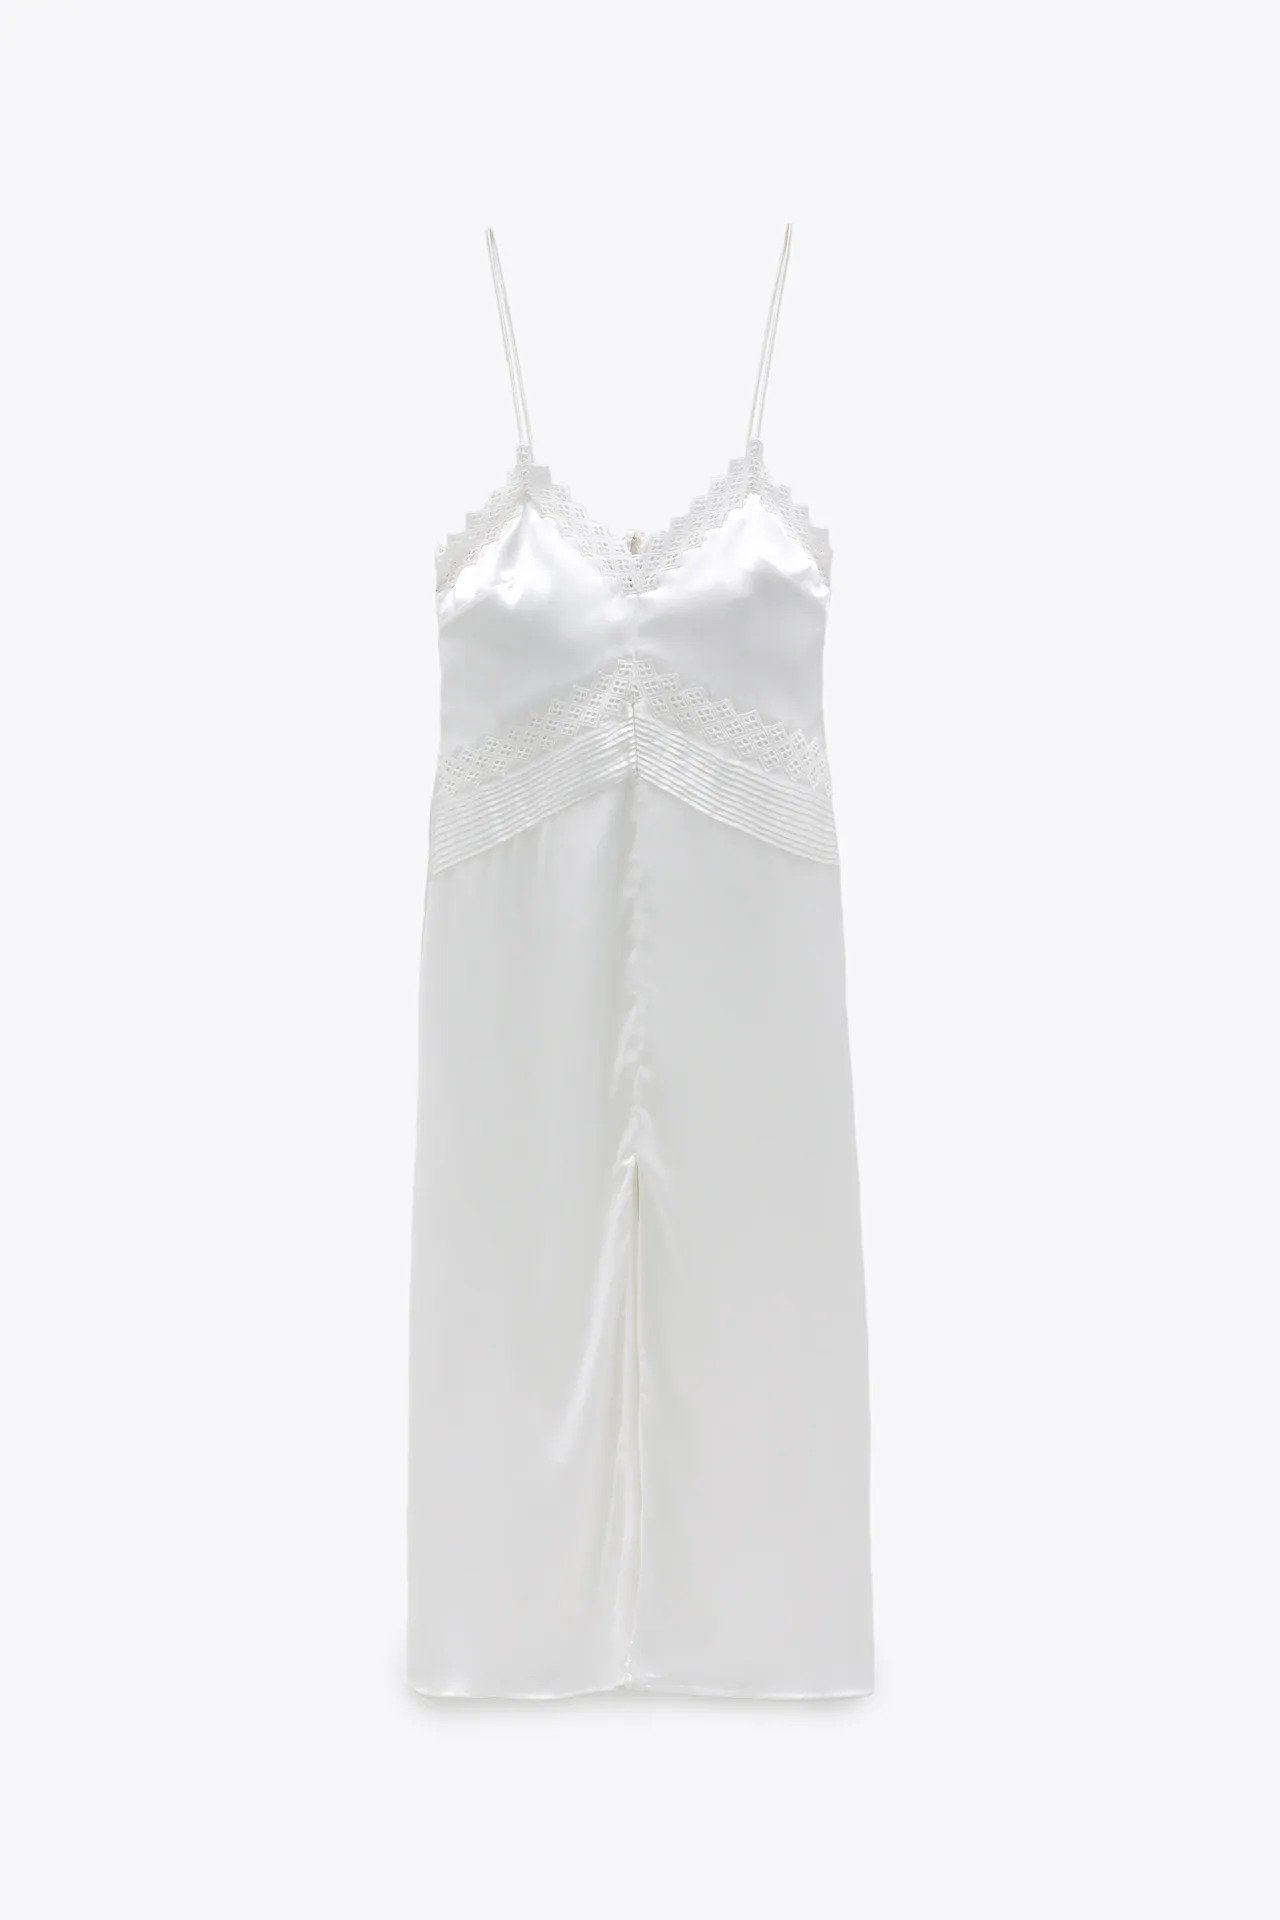 zara white beach dress